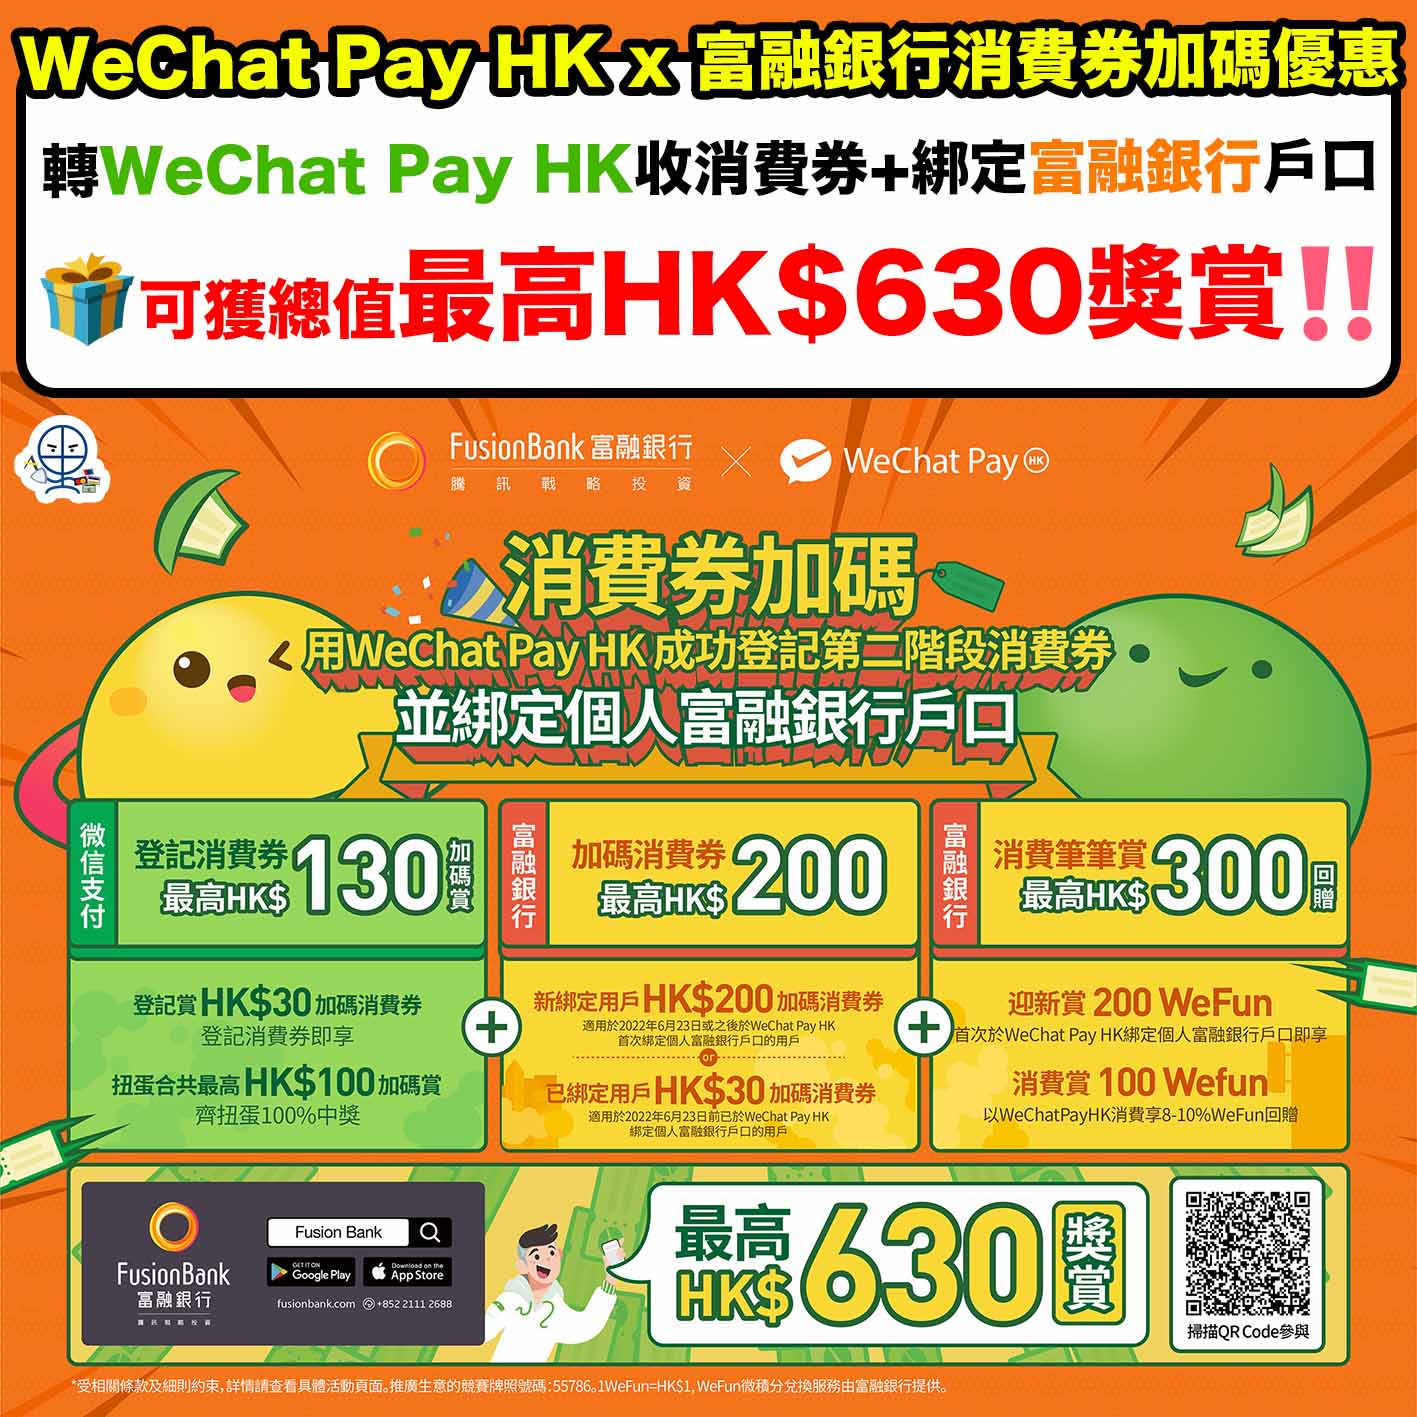 WeChat Pay HK-富融銀行-消費券加碼優惠-消費券-回贈獎賞-WeFun回贈獎賞